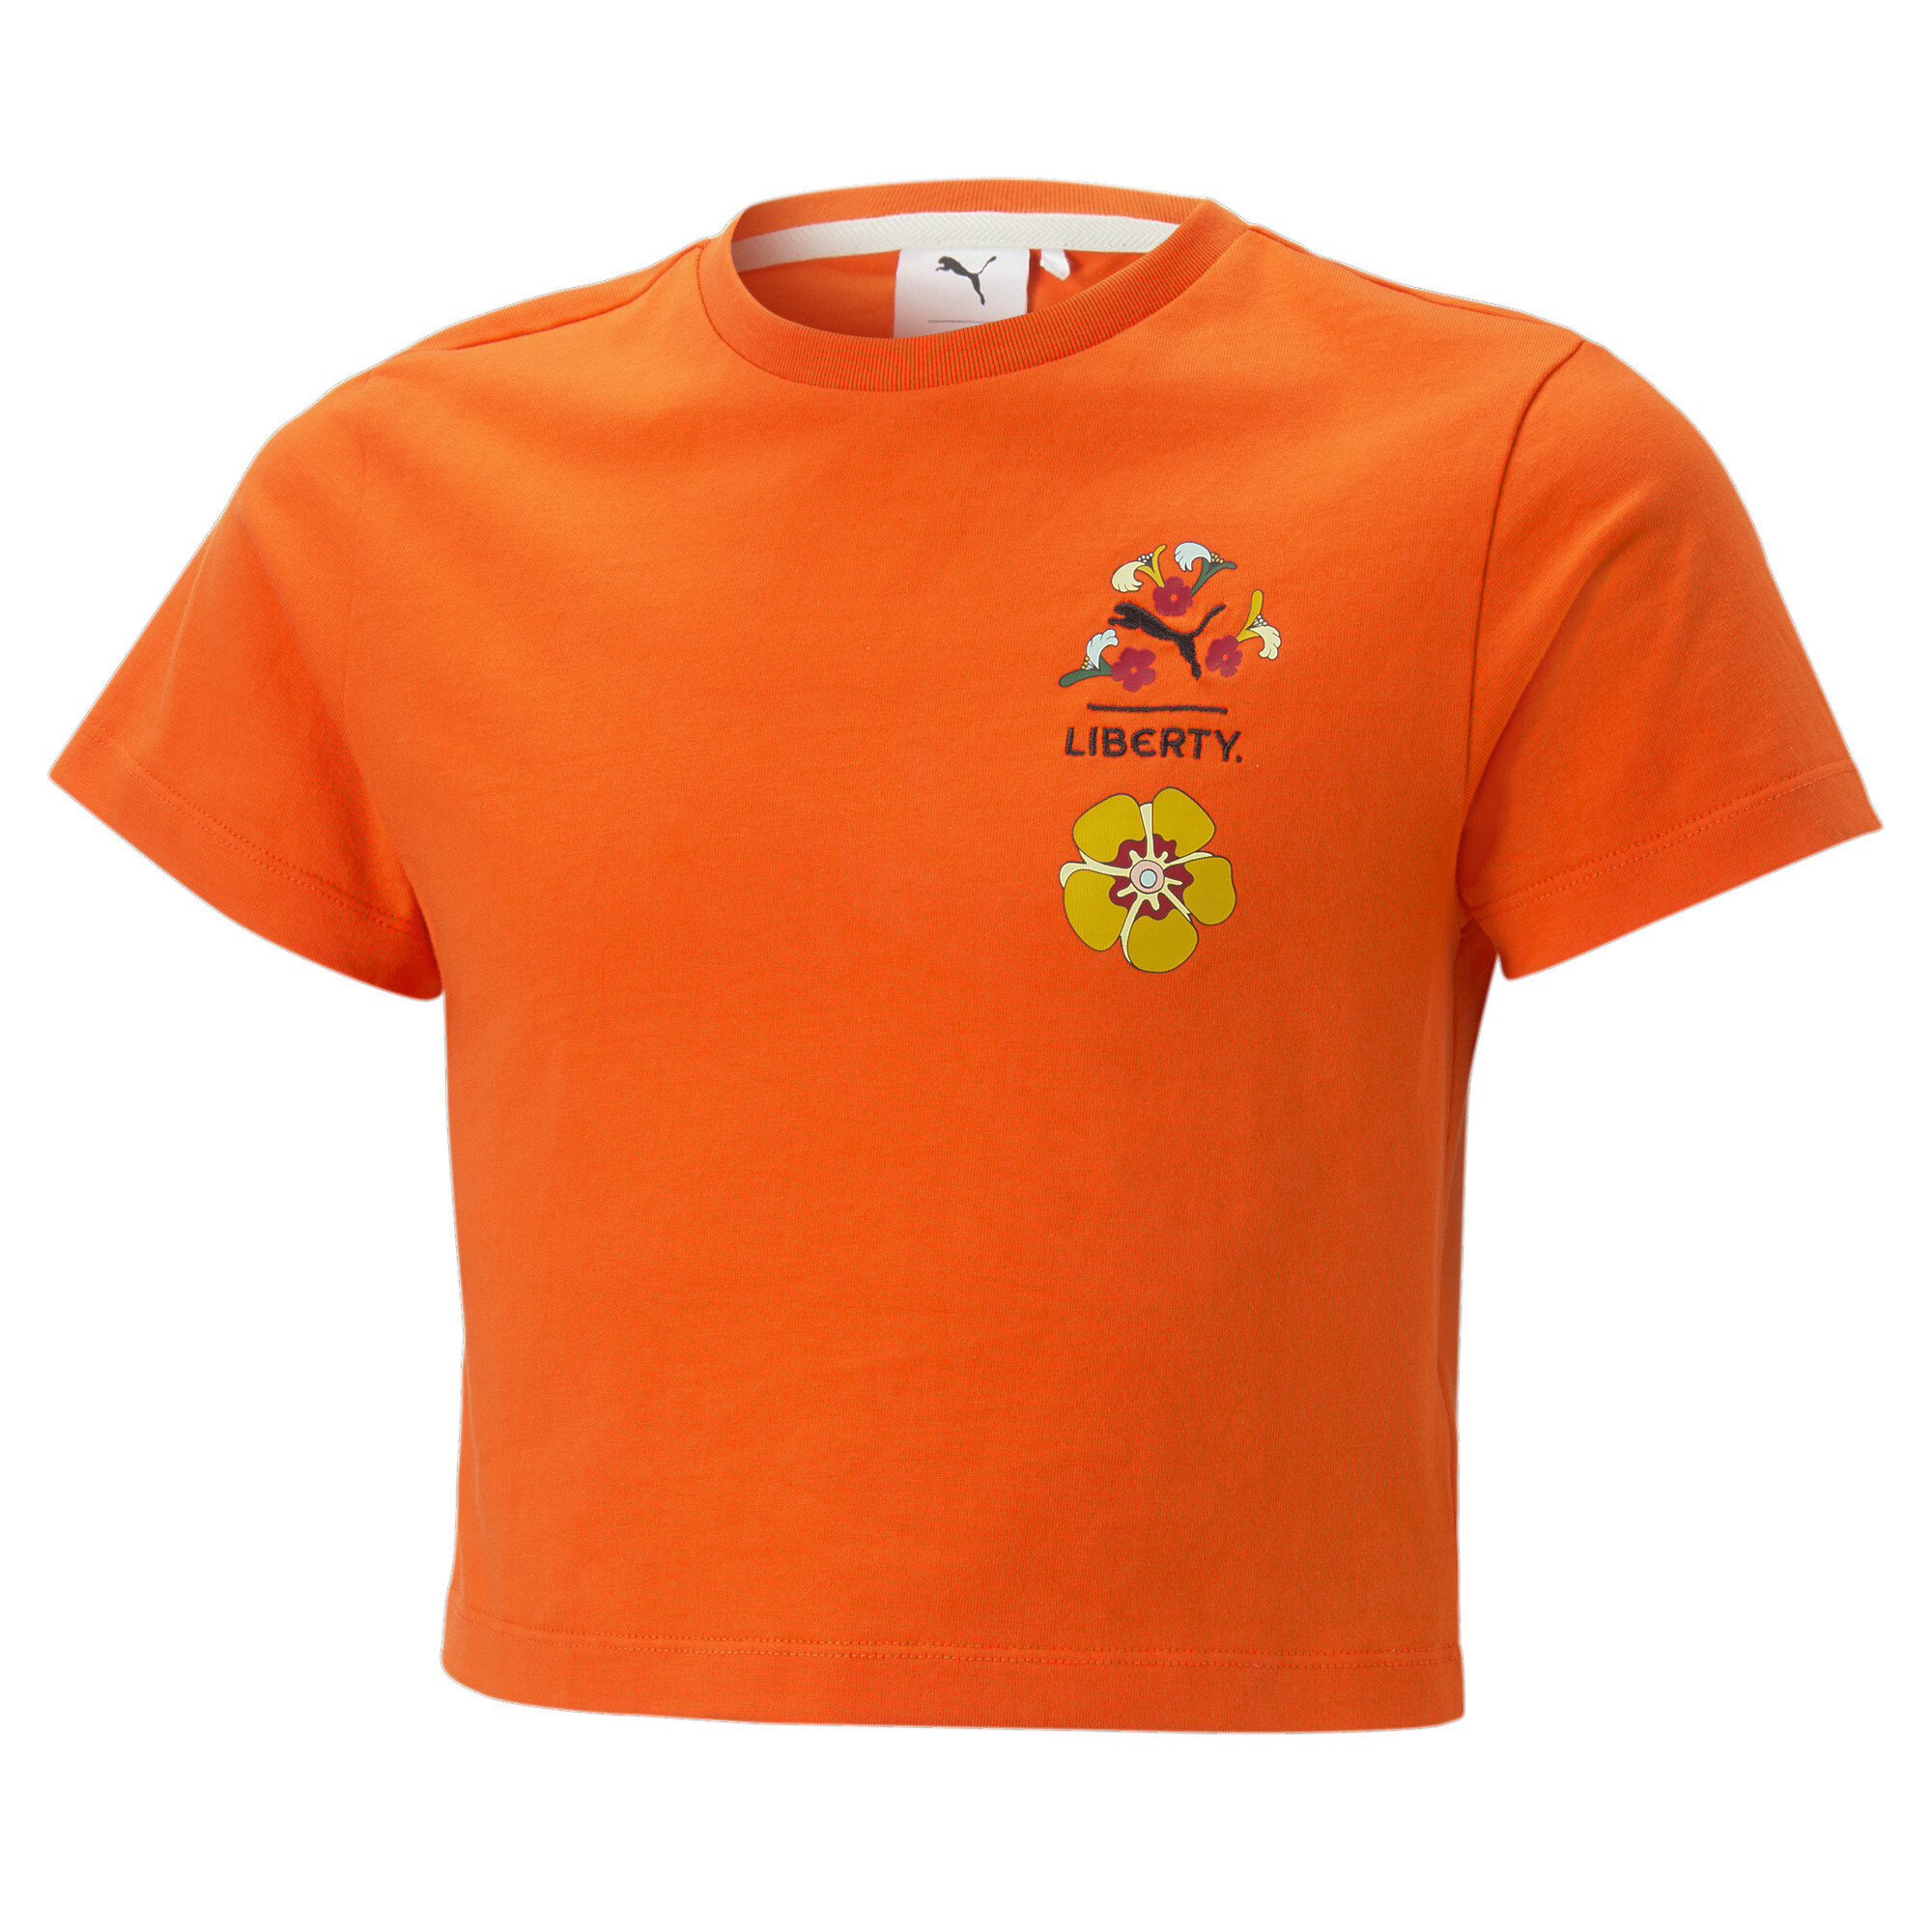 Puma X LIBERTY Tee Kids, Orange, Size 4-5Y, Clothing